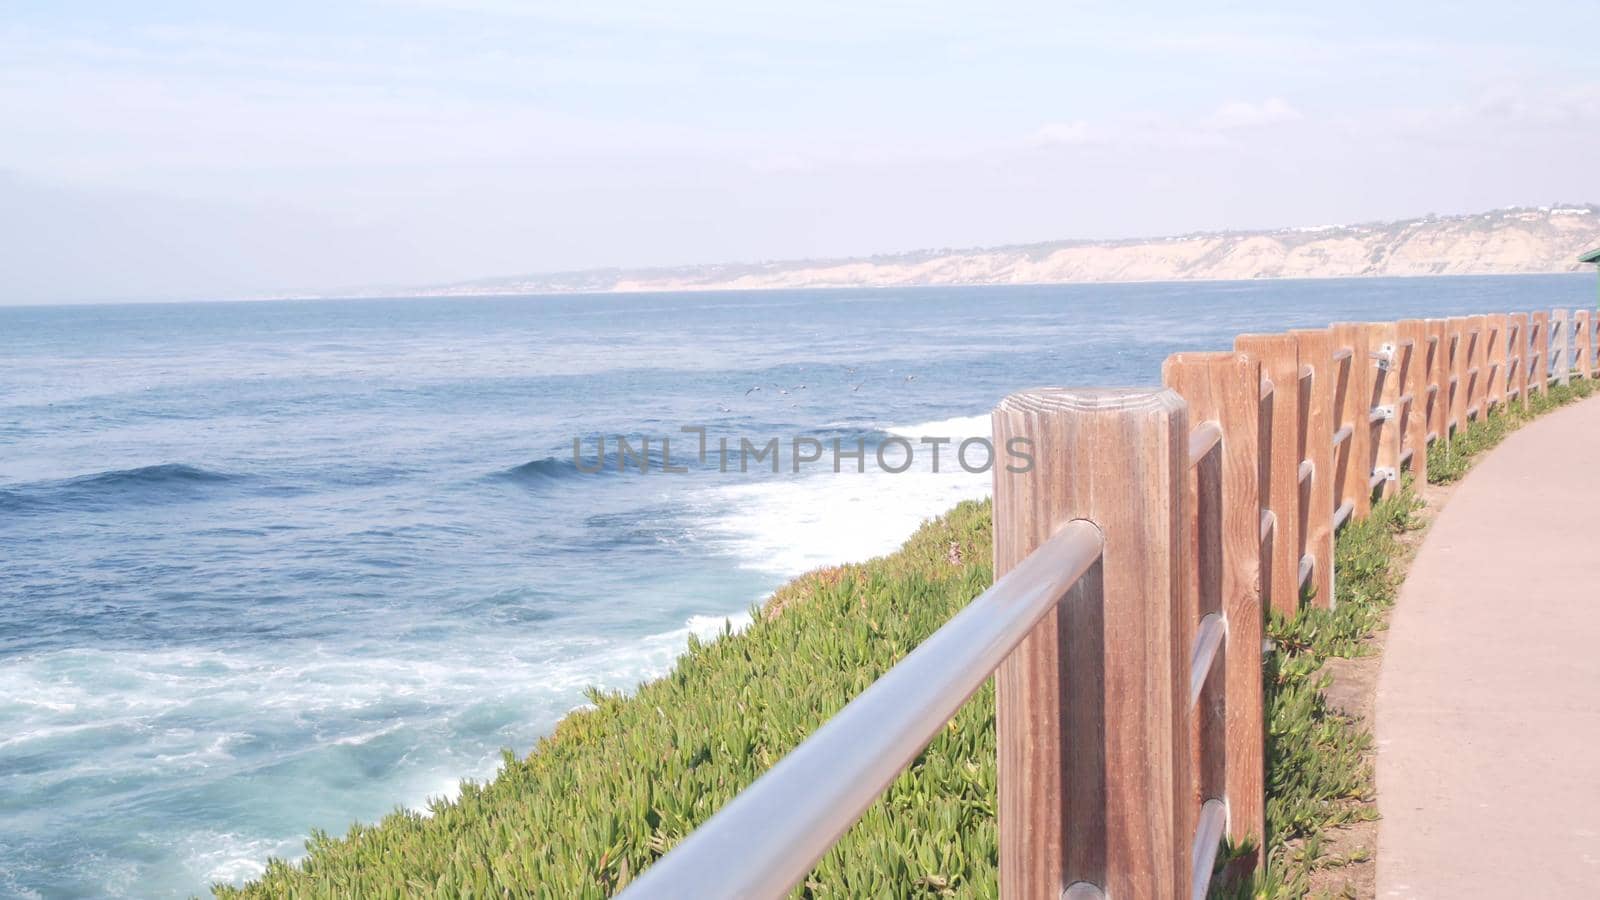 Ocean waves crashing on beach, water, railings and succulent plants, California by DogoraSun